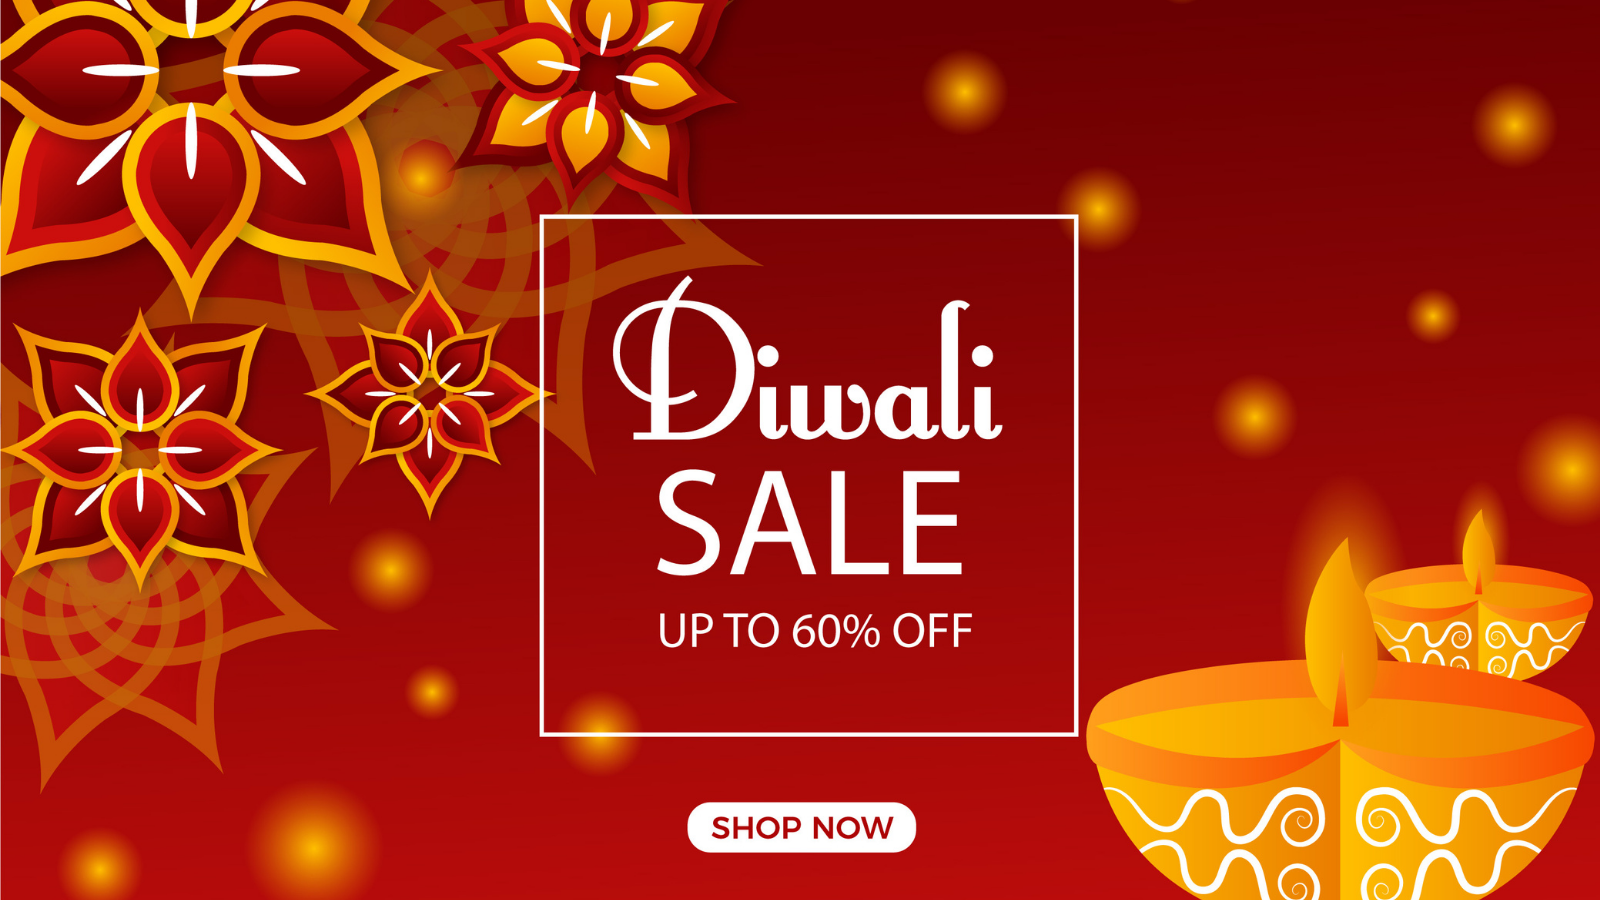 social-media-marketing-strategy-for-diwali-provide-discounts